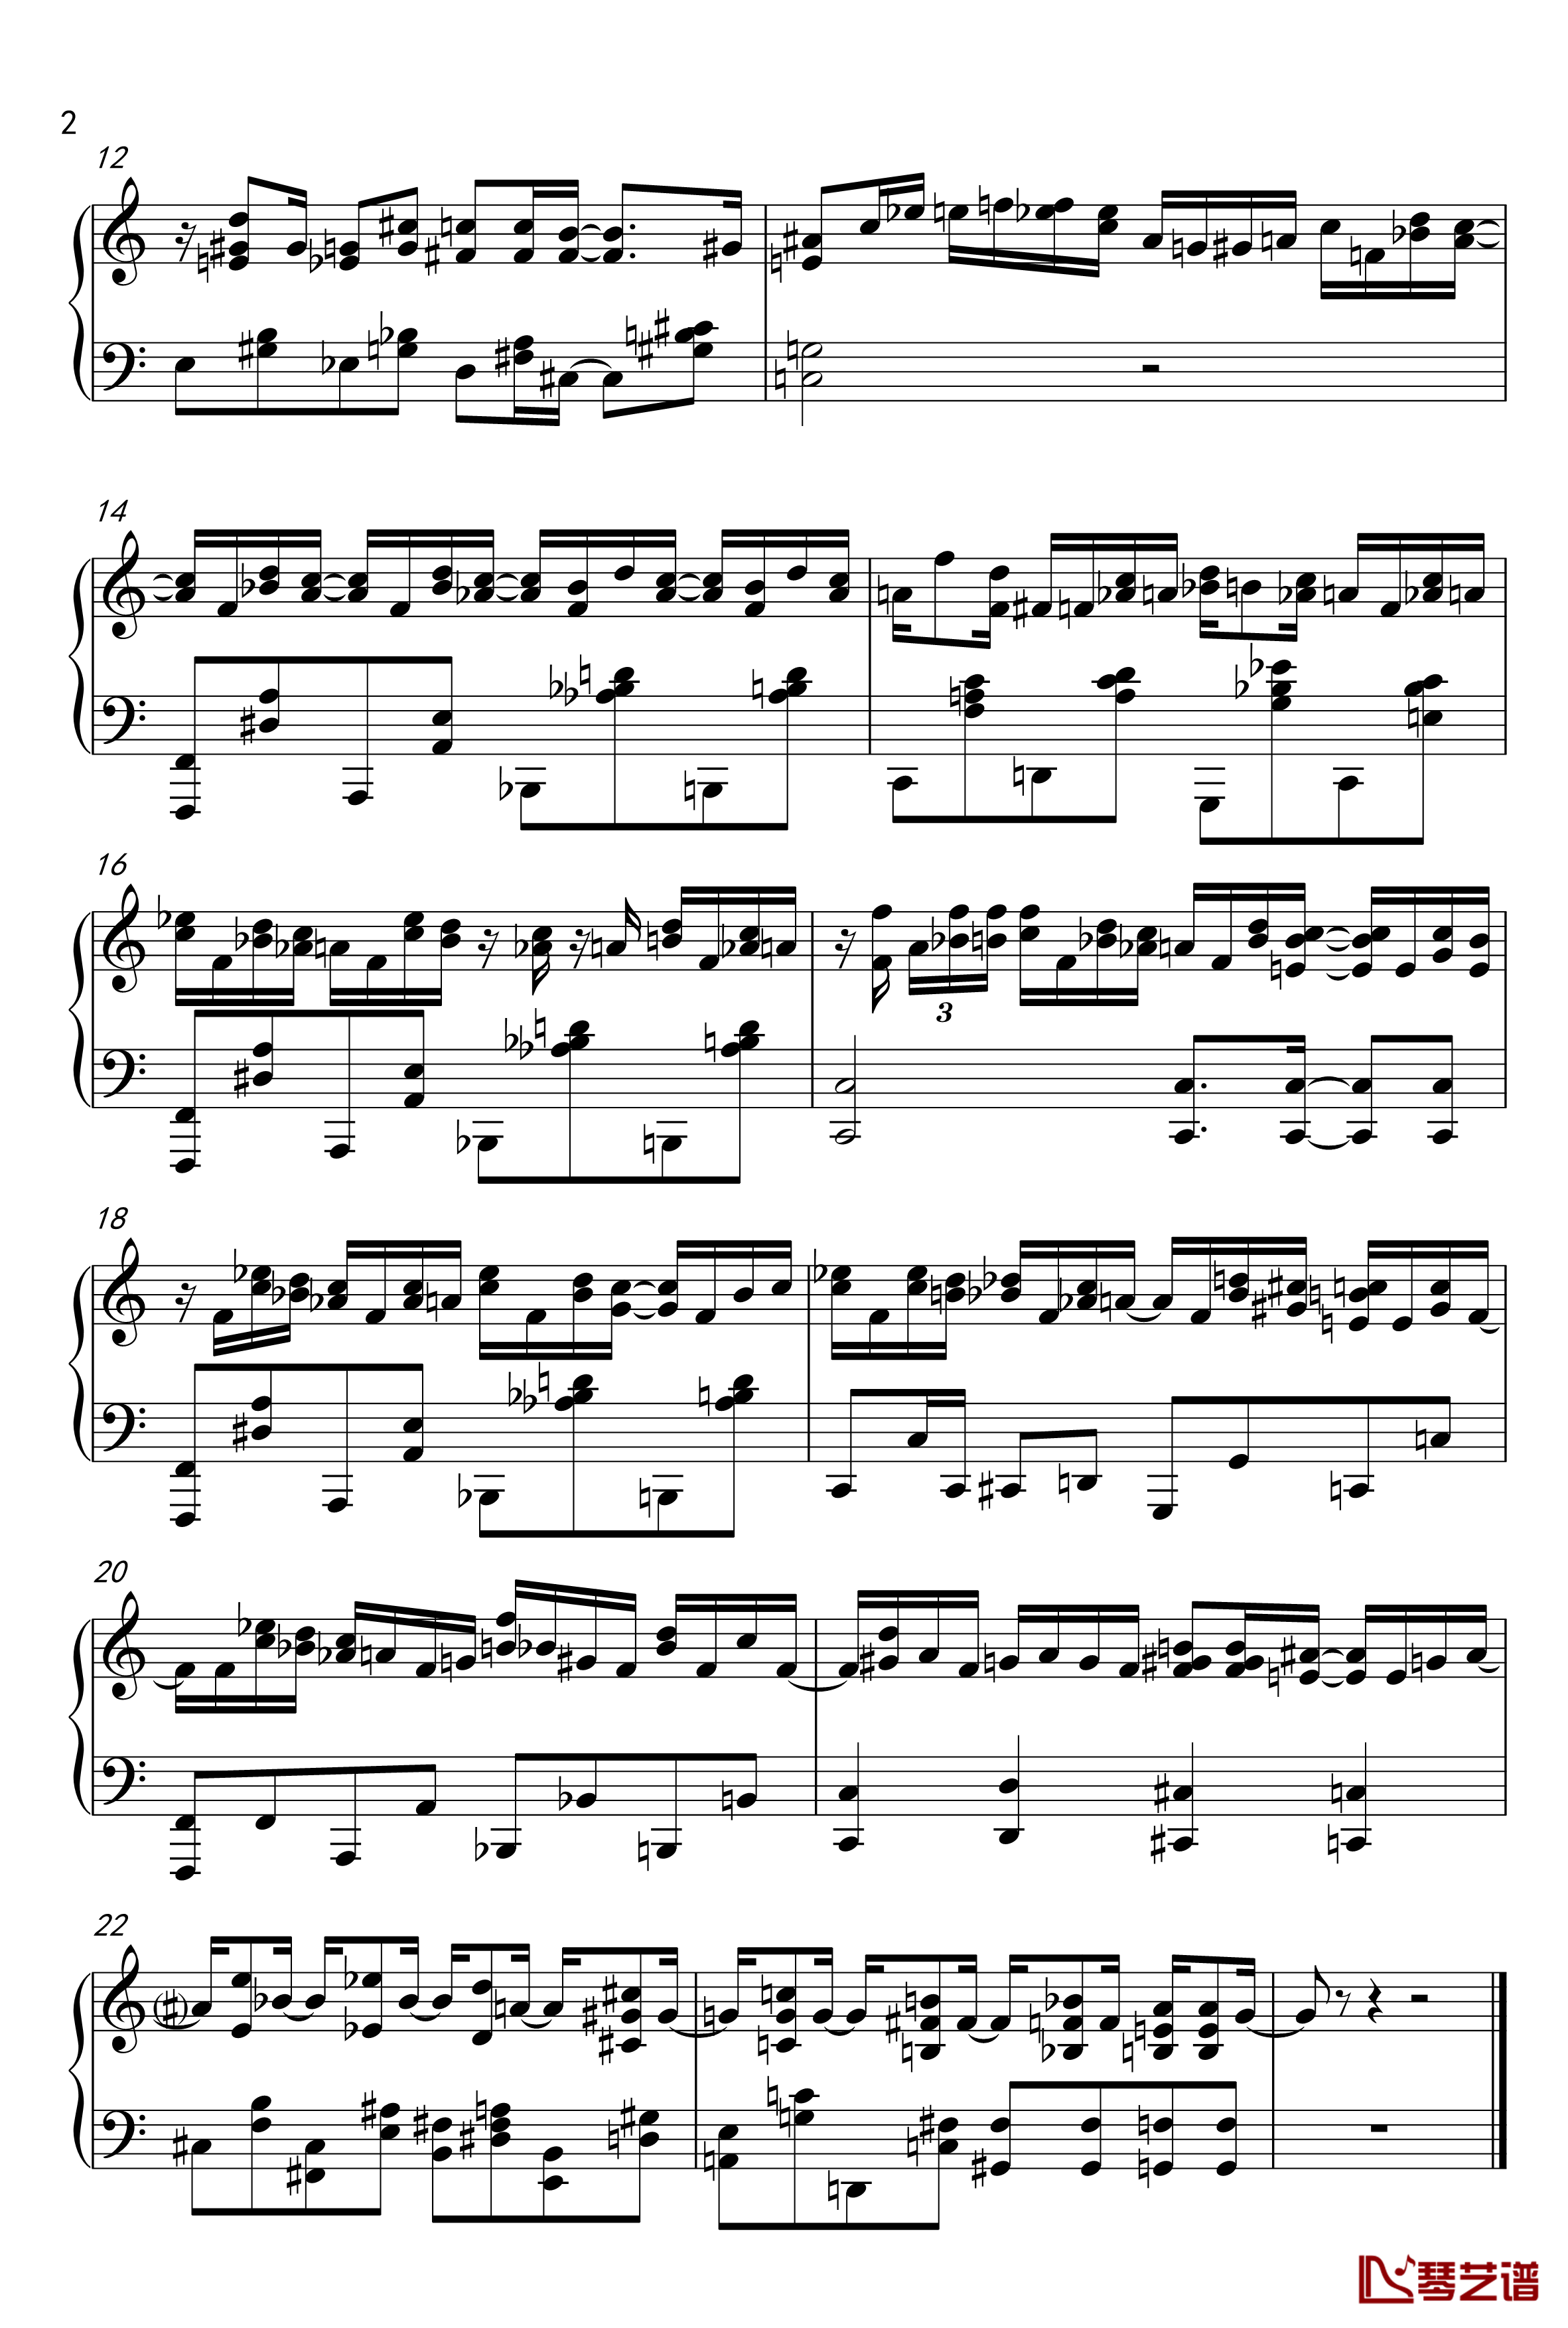 Madness Solo No 1钢琴谱-1900-海上钢琴2